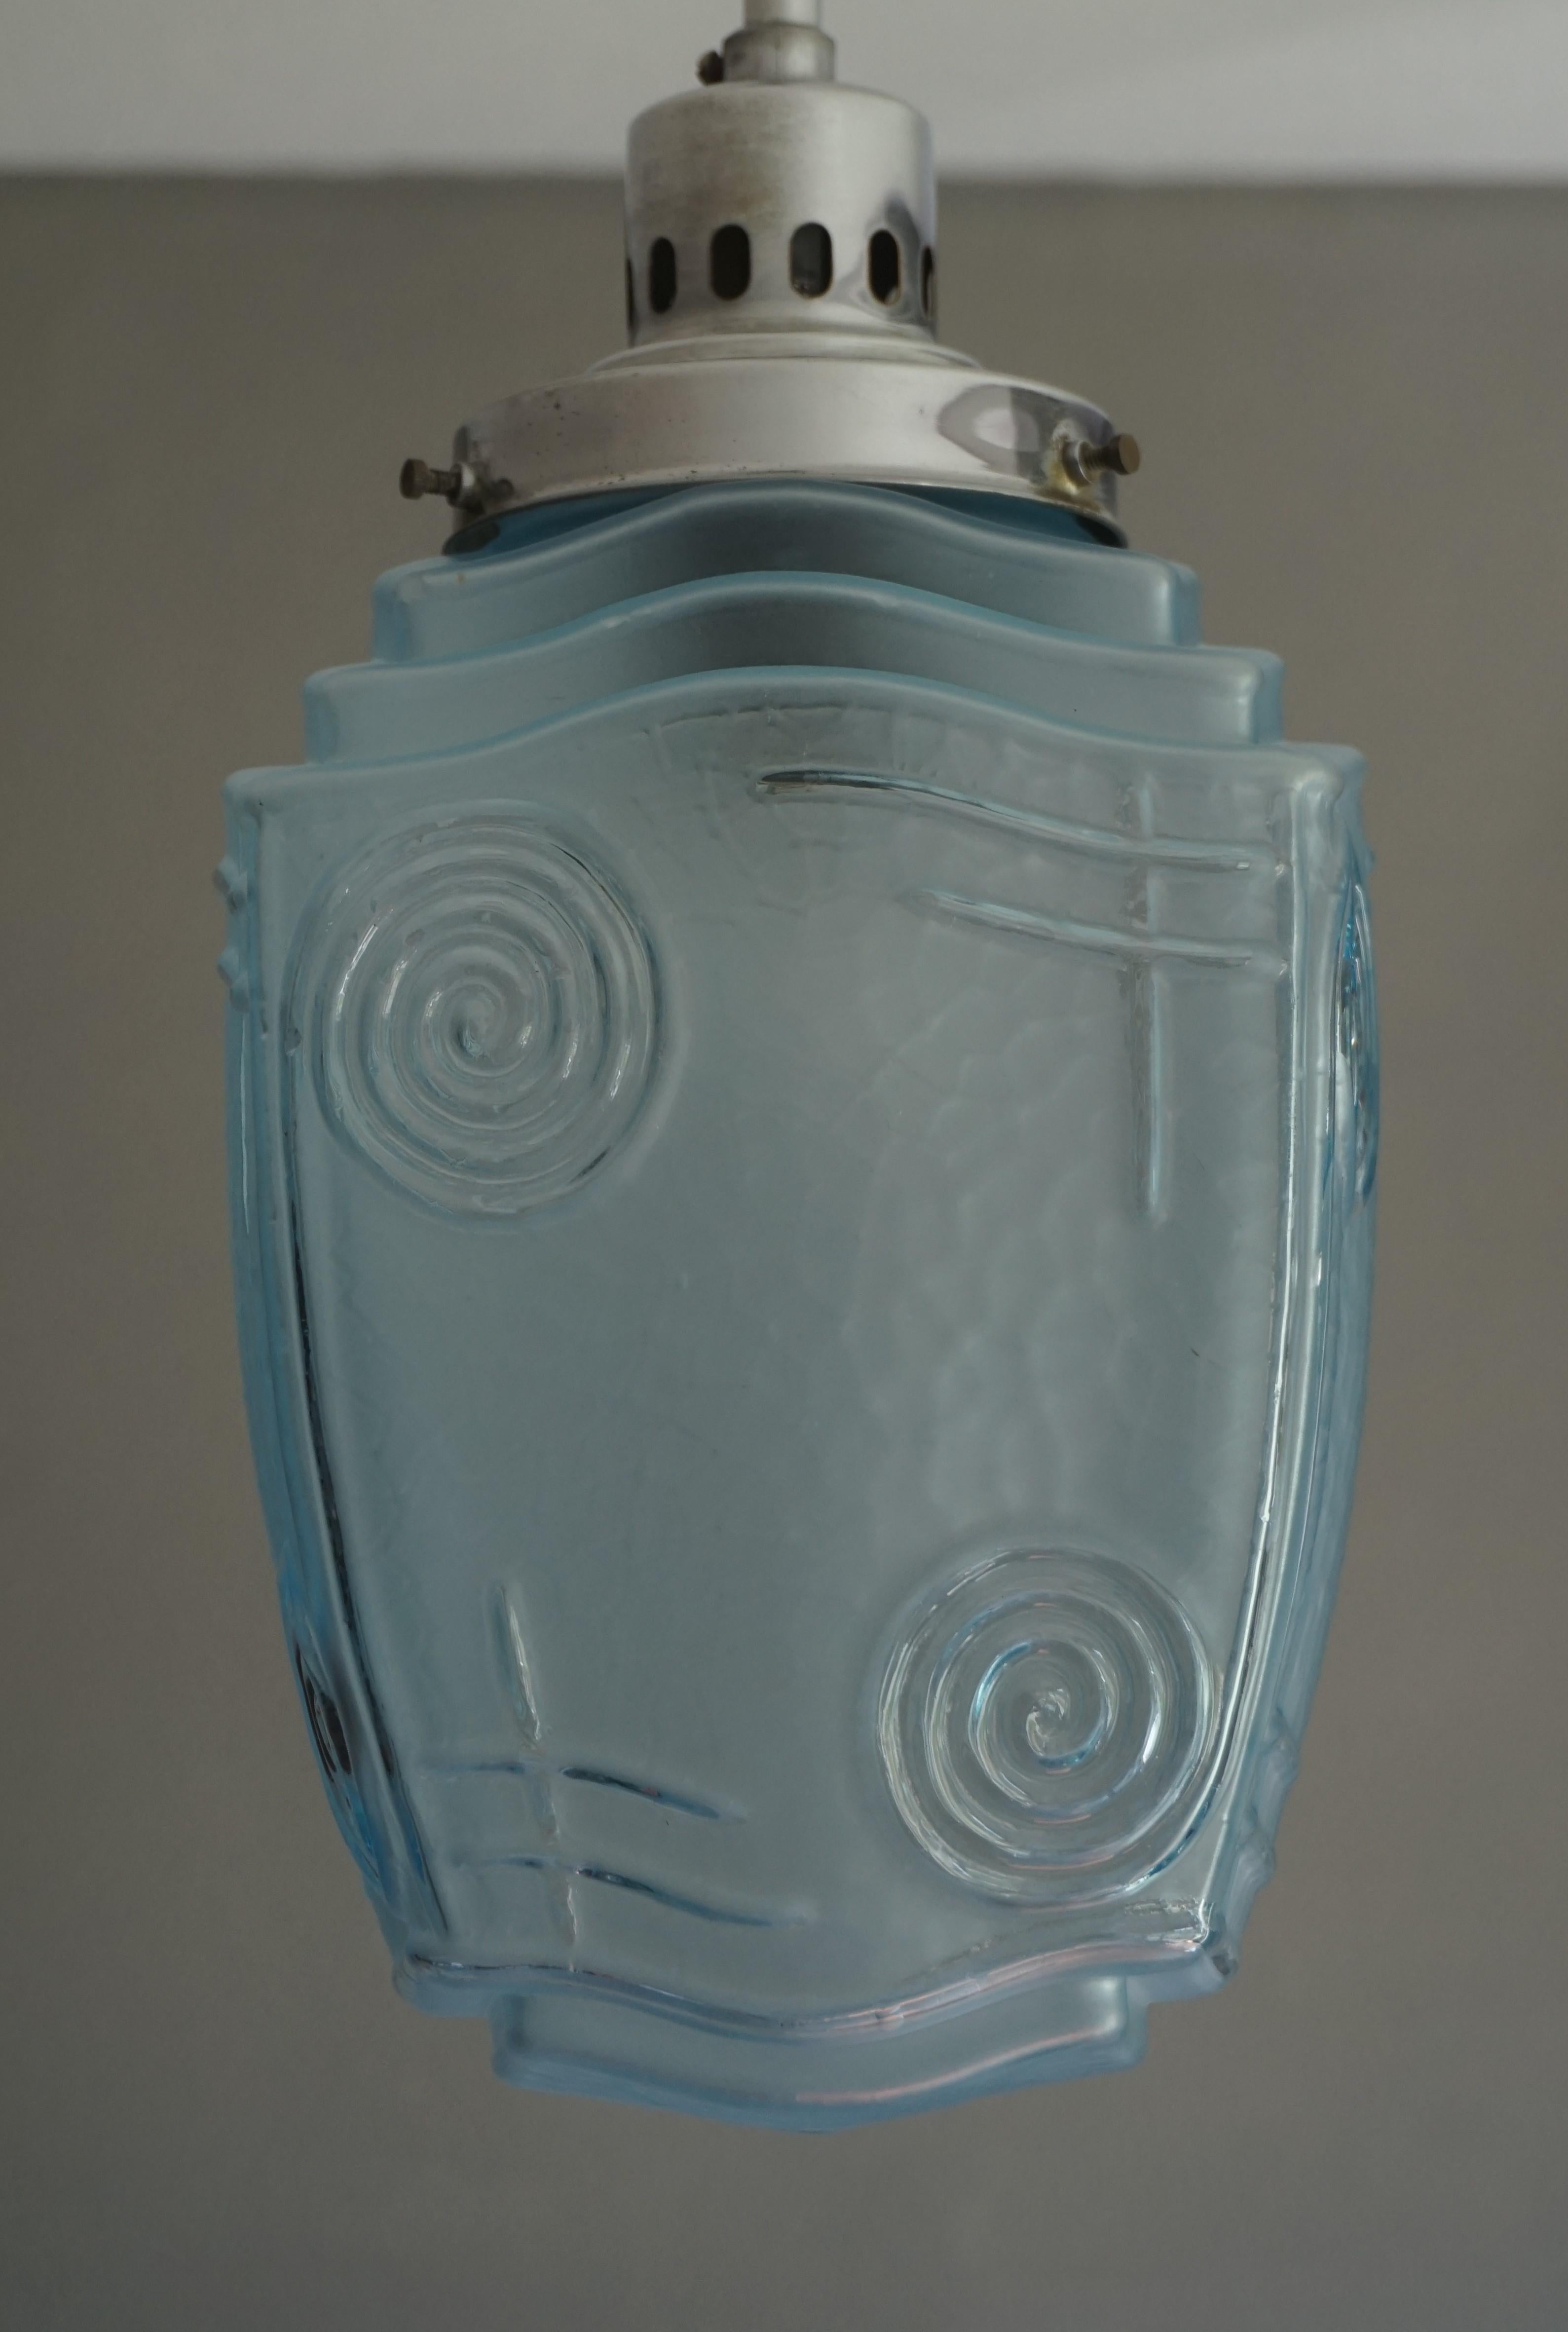 Rare and Excellent Condition Blue Glass and Chrome Metal Art Deco Pendant Light 1